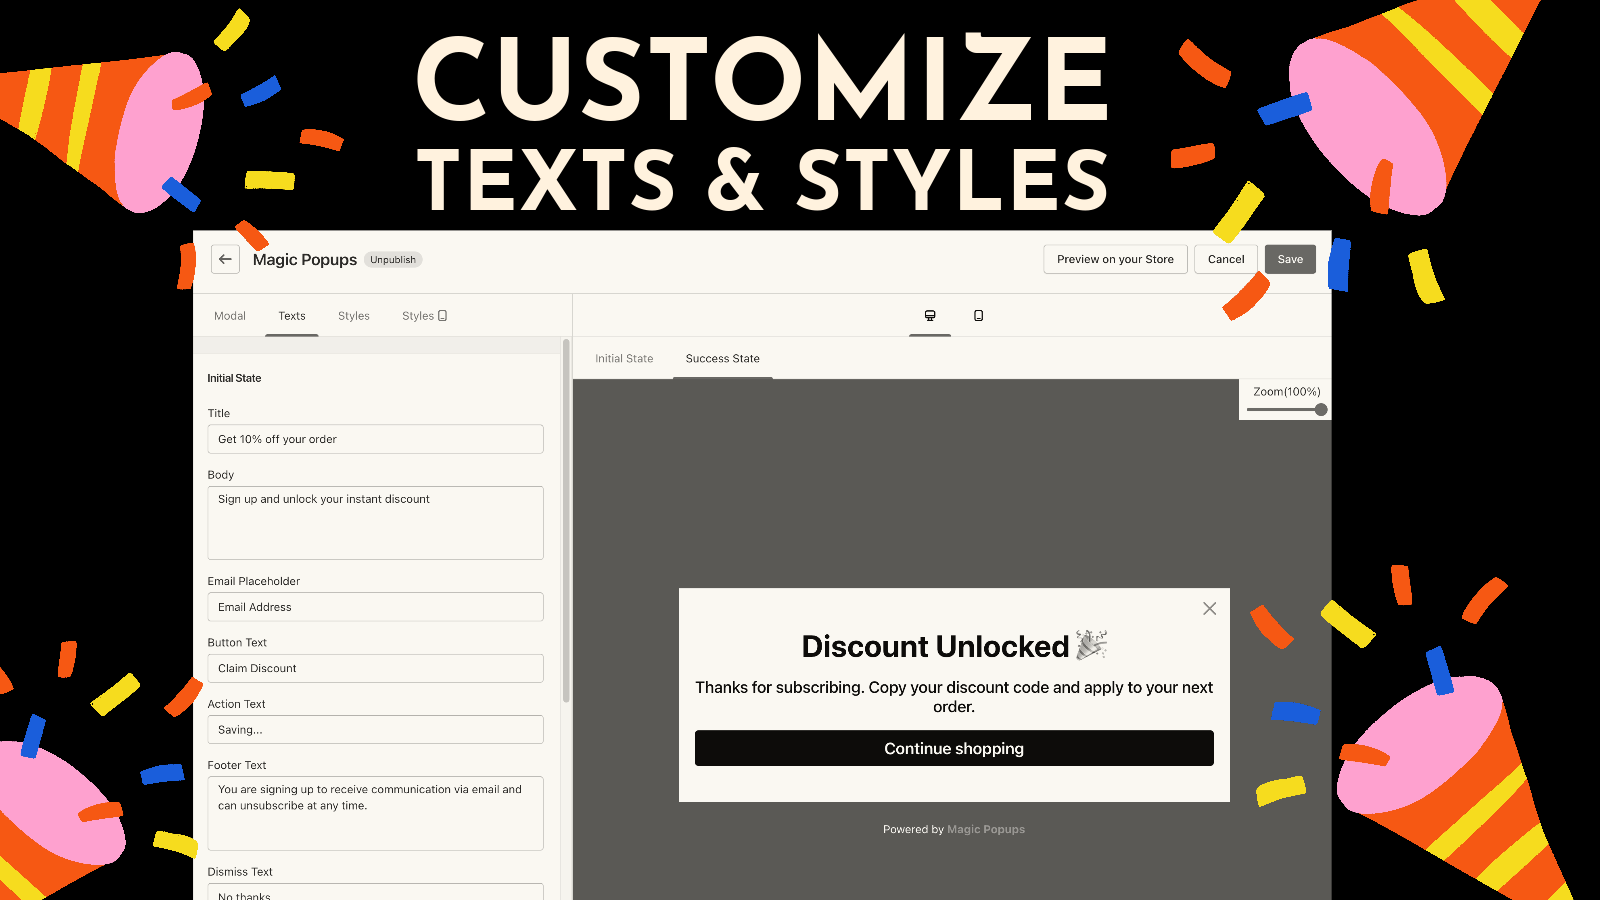 Customize texts & styles